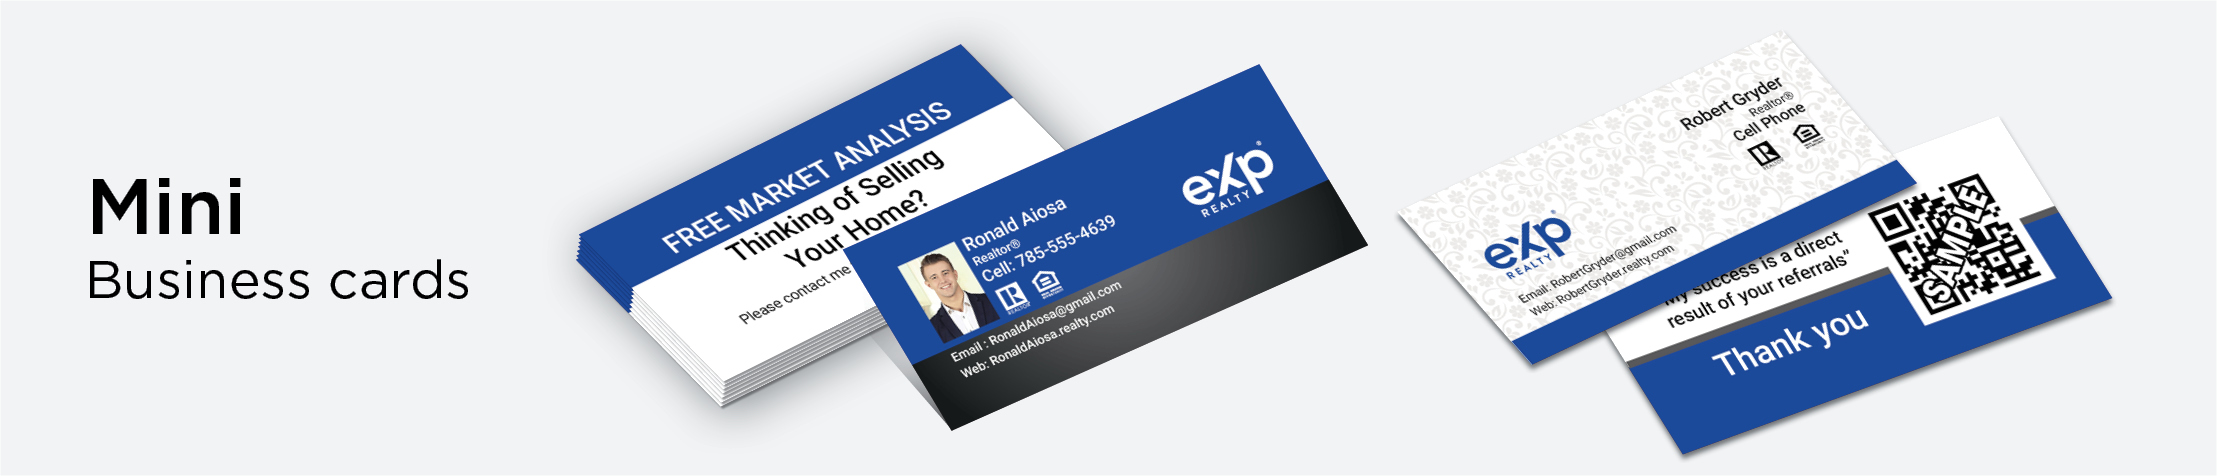 eXp Realty Real Estate Mini Business Cards - eXp Realty - Unique, Slim, Half Size Modern Business Cards for Realtors | BestPrintBuy.com